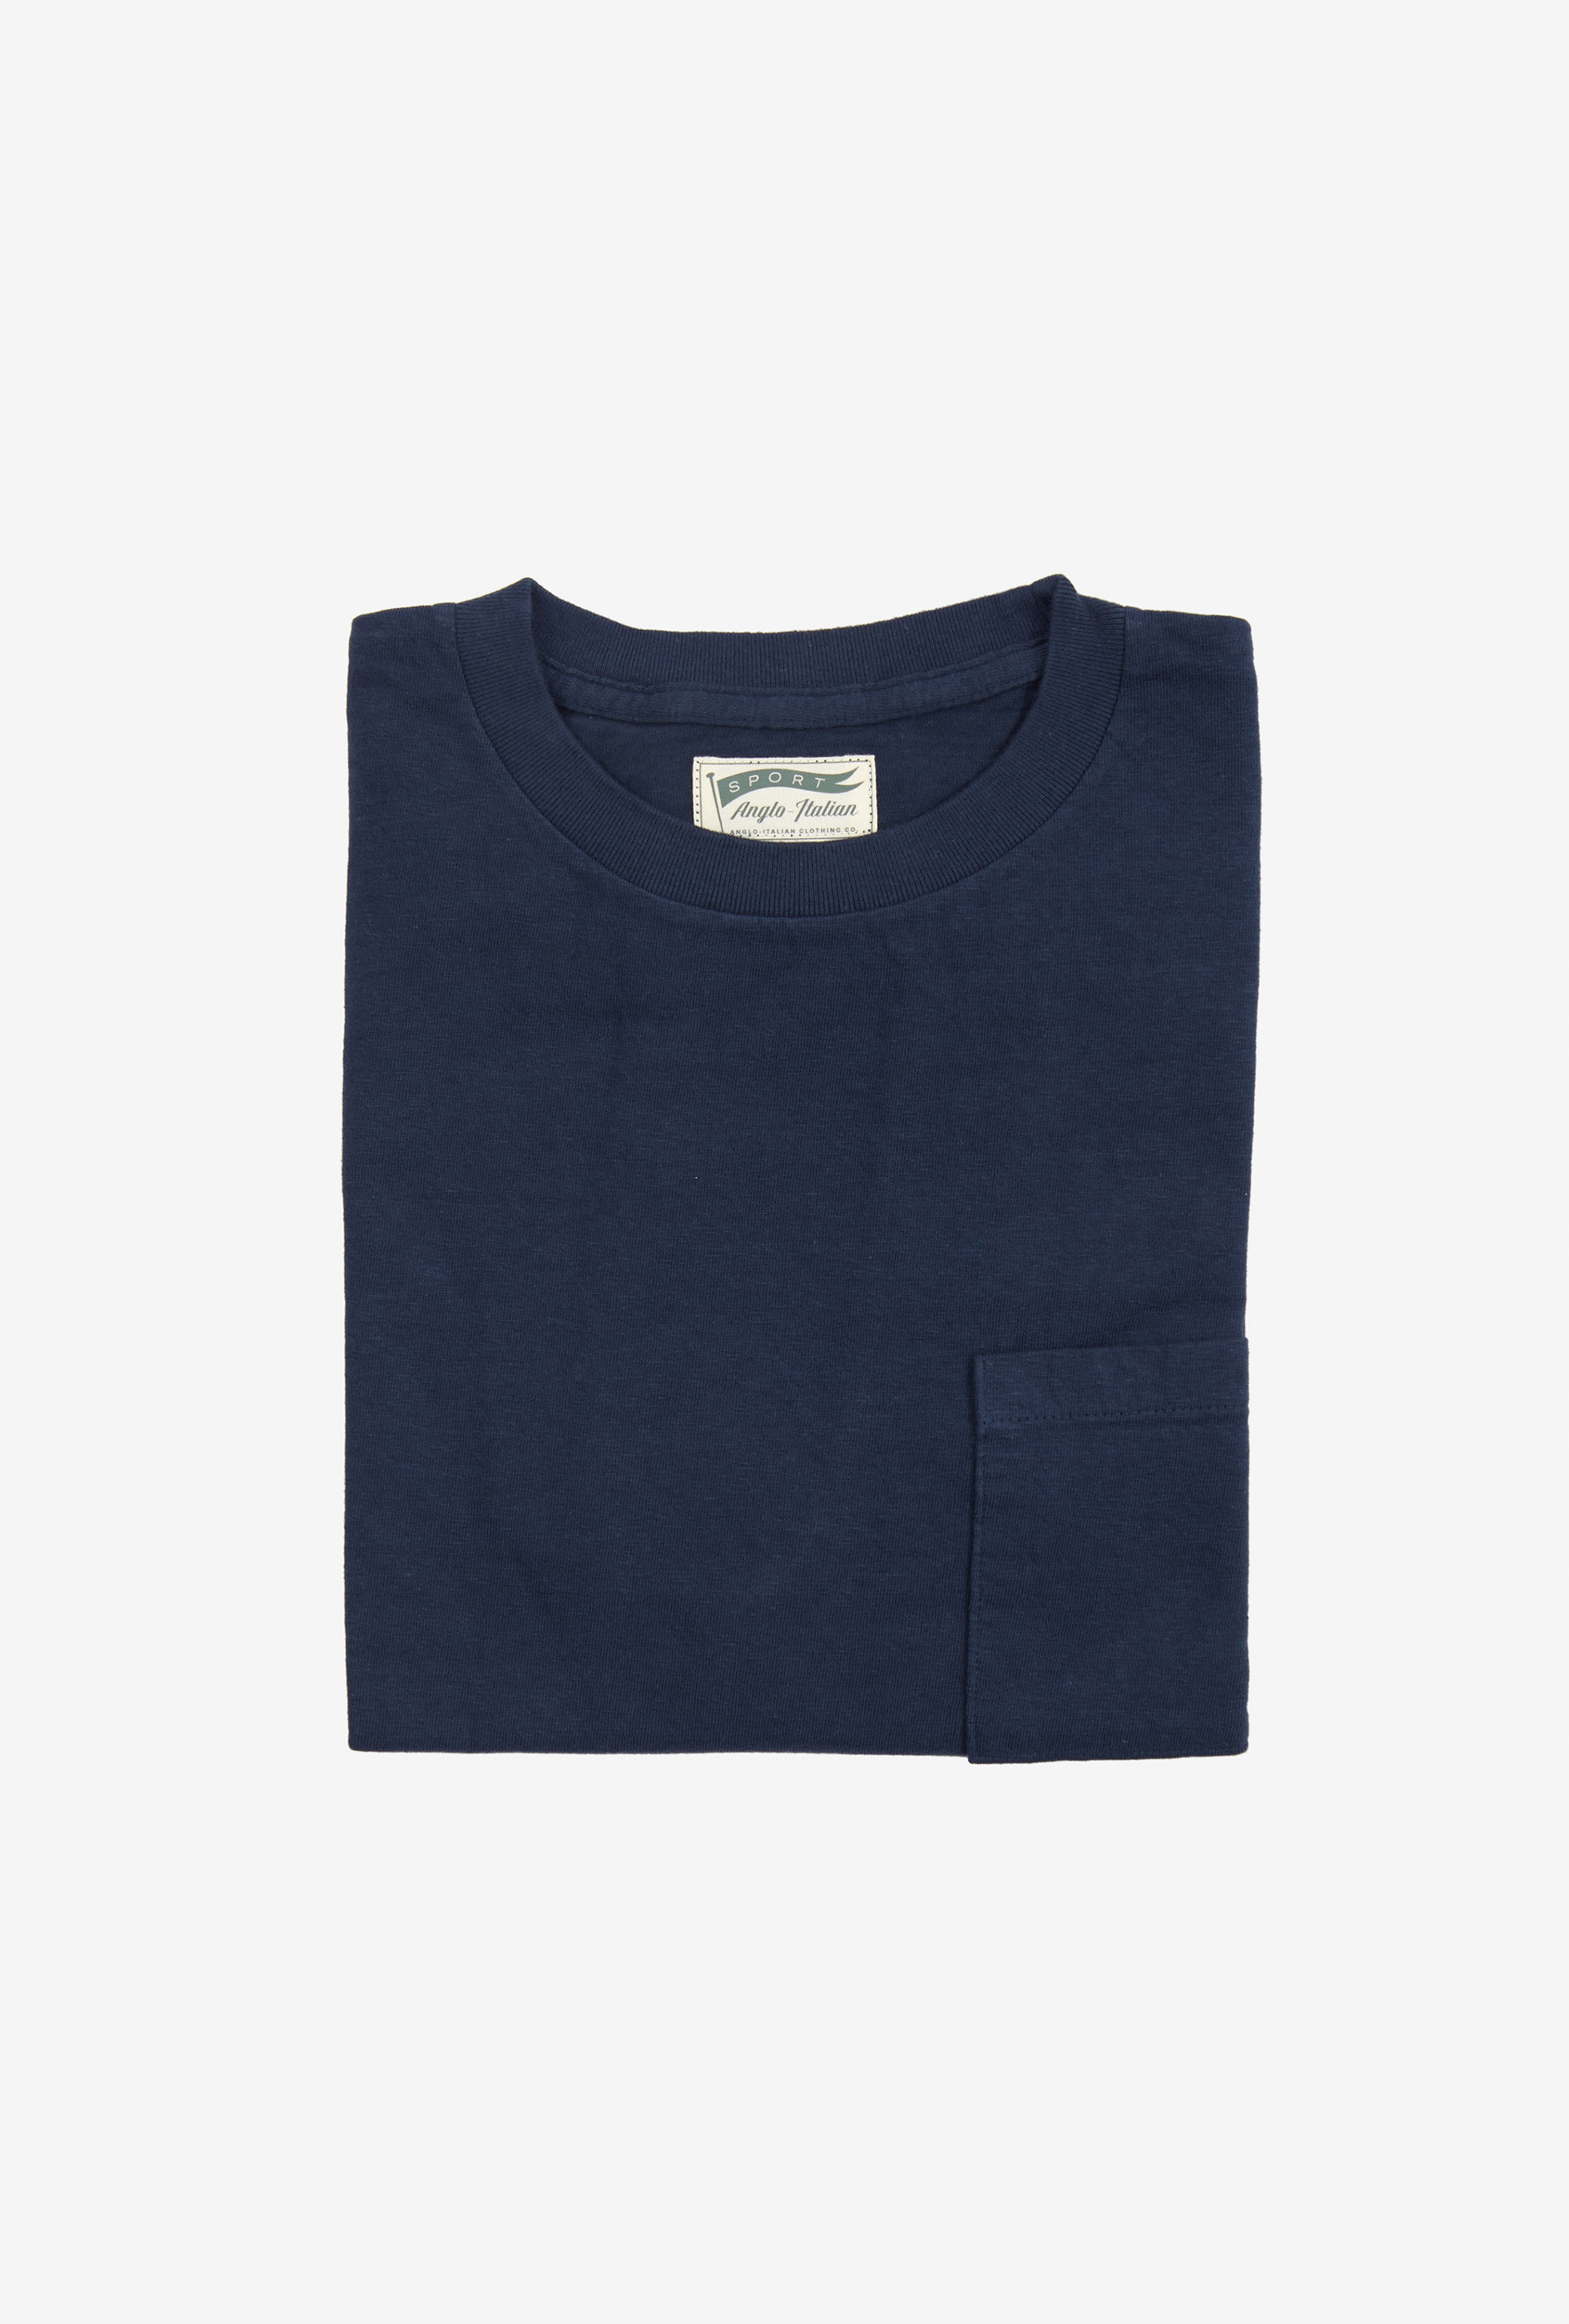 Cotton Pocket T-Shirt Navy